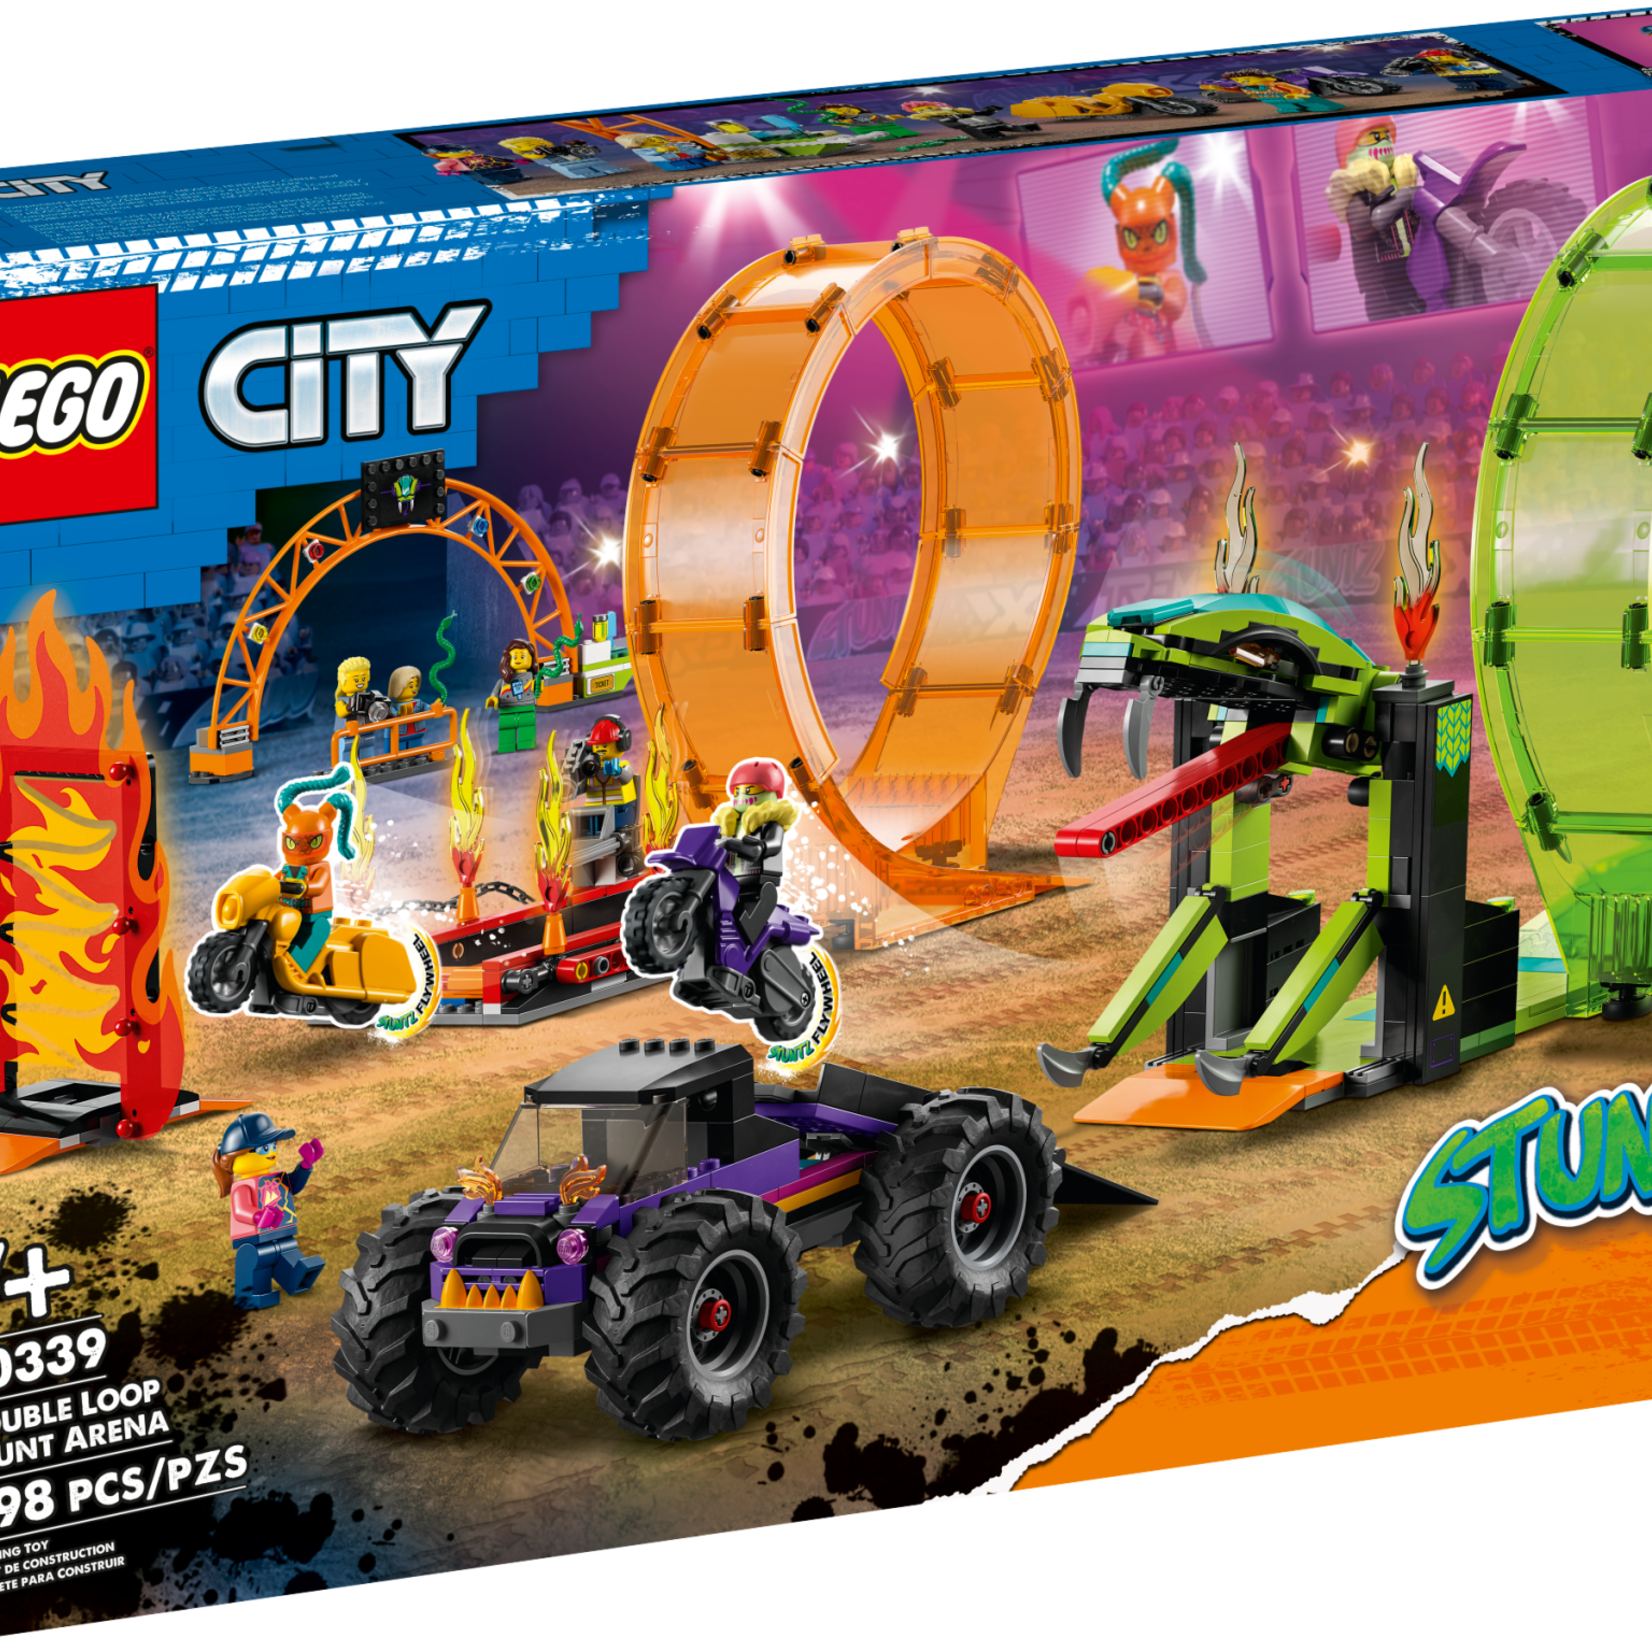 Lego *****Lego 60339 City - L’arène de cascades double boucle